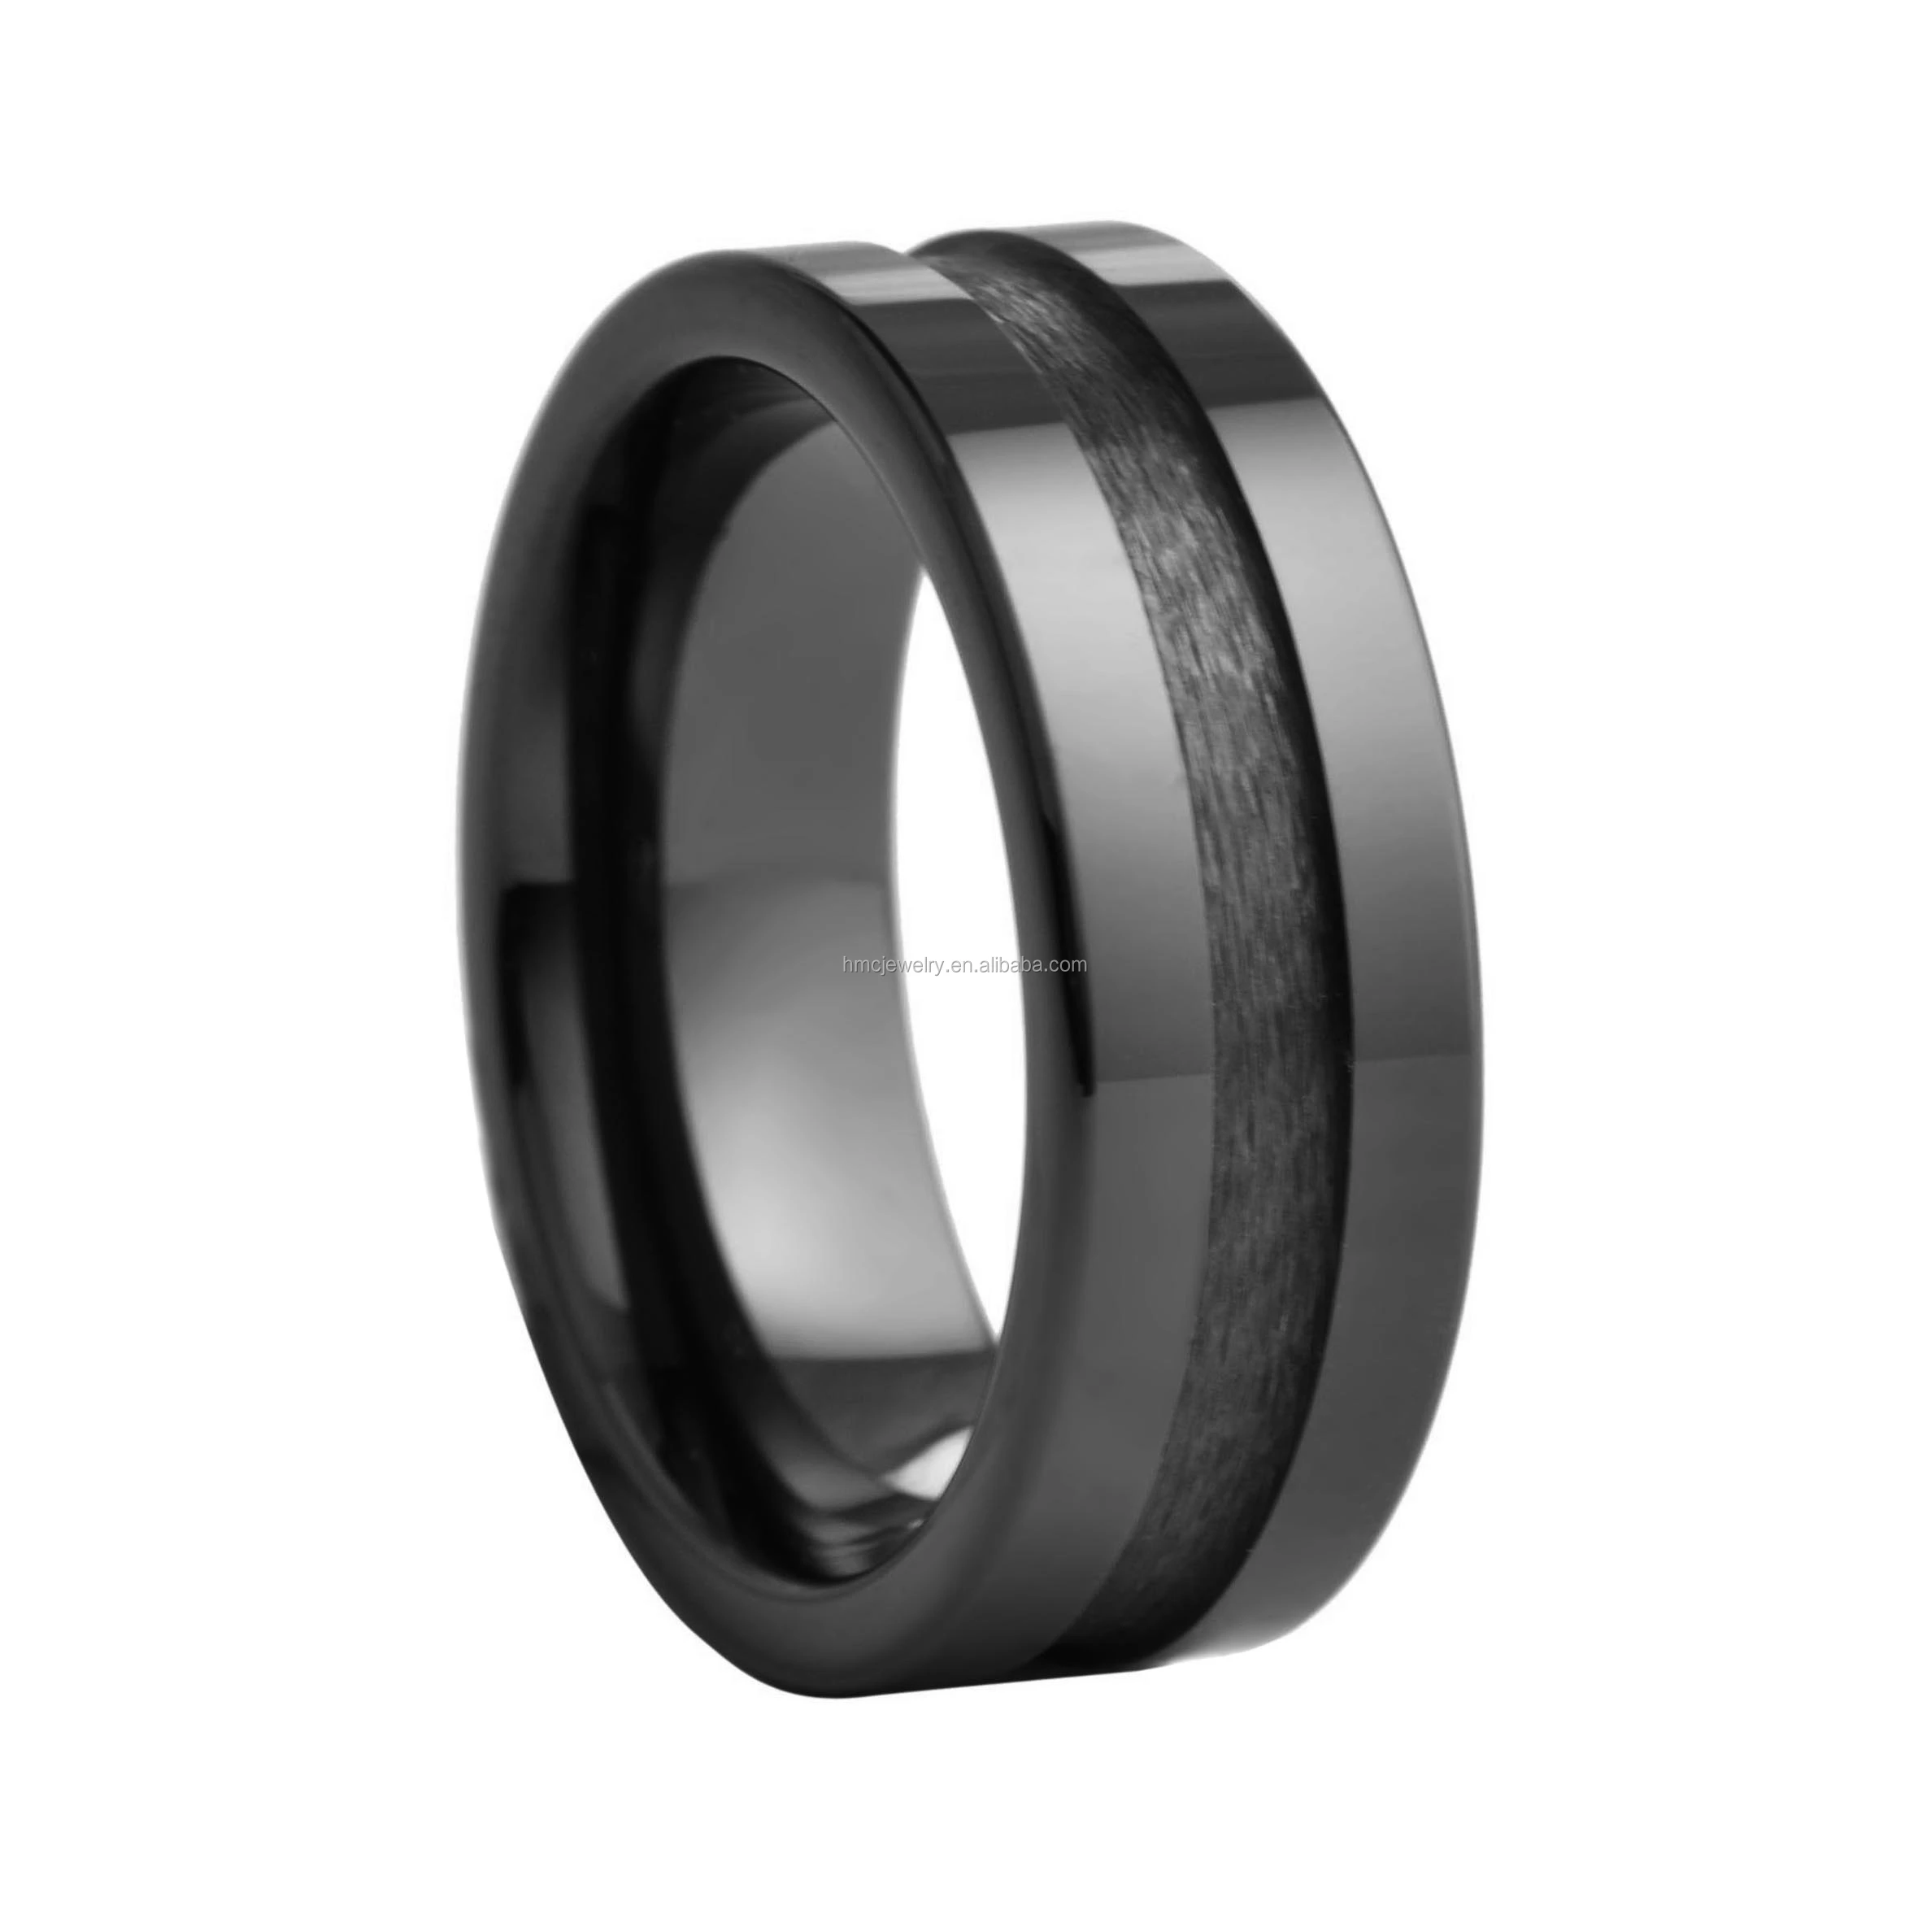 Black Ceramic Ring Blank Ring Grooved For Inlay - Buy Ceramic Ring ...